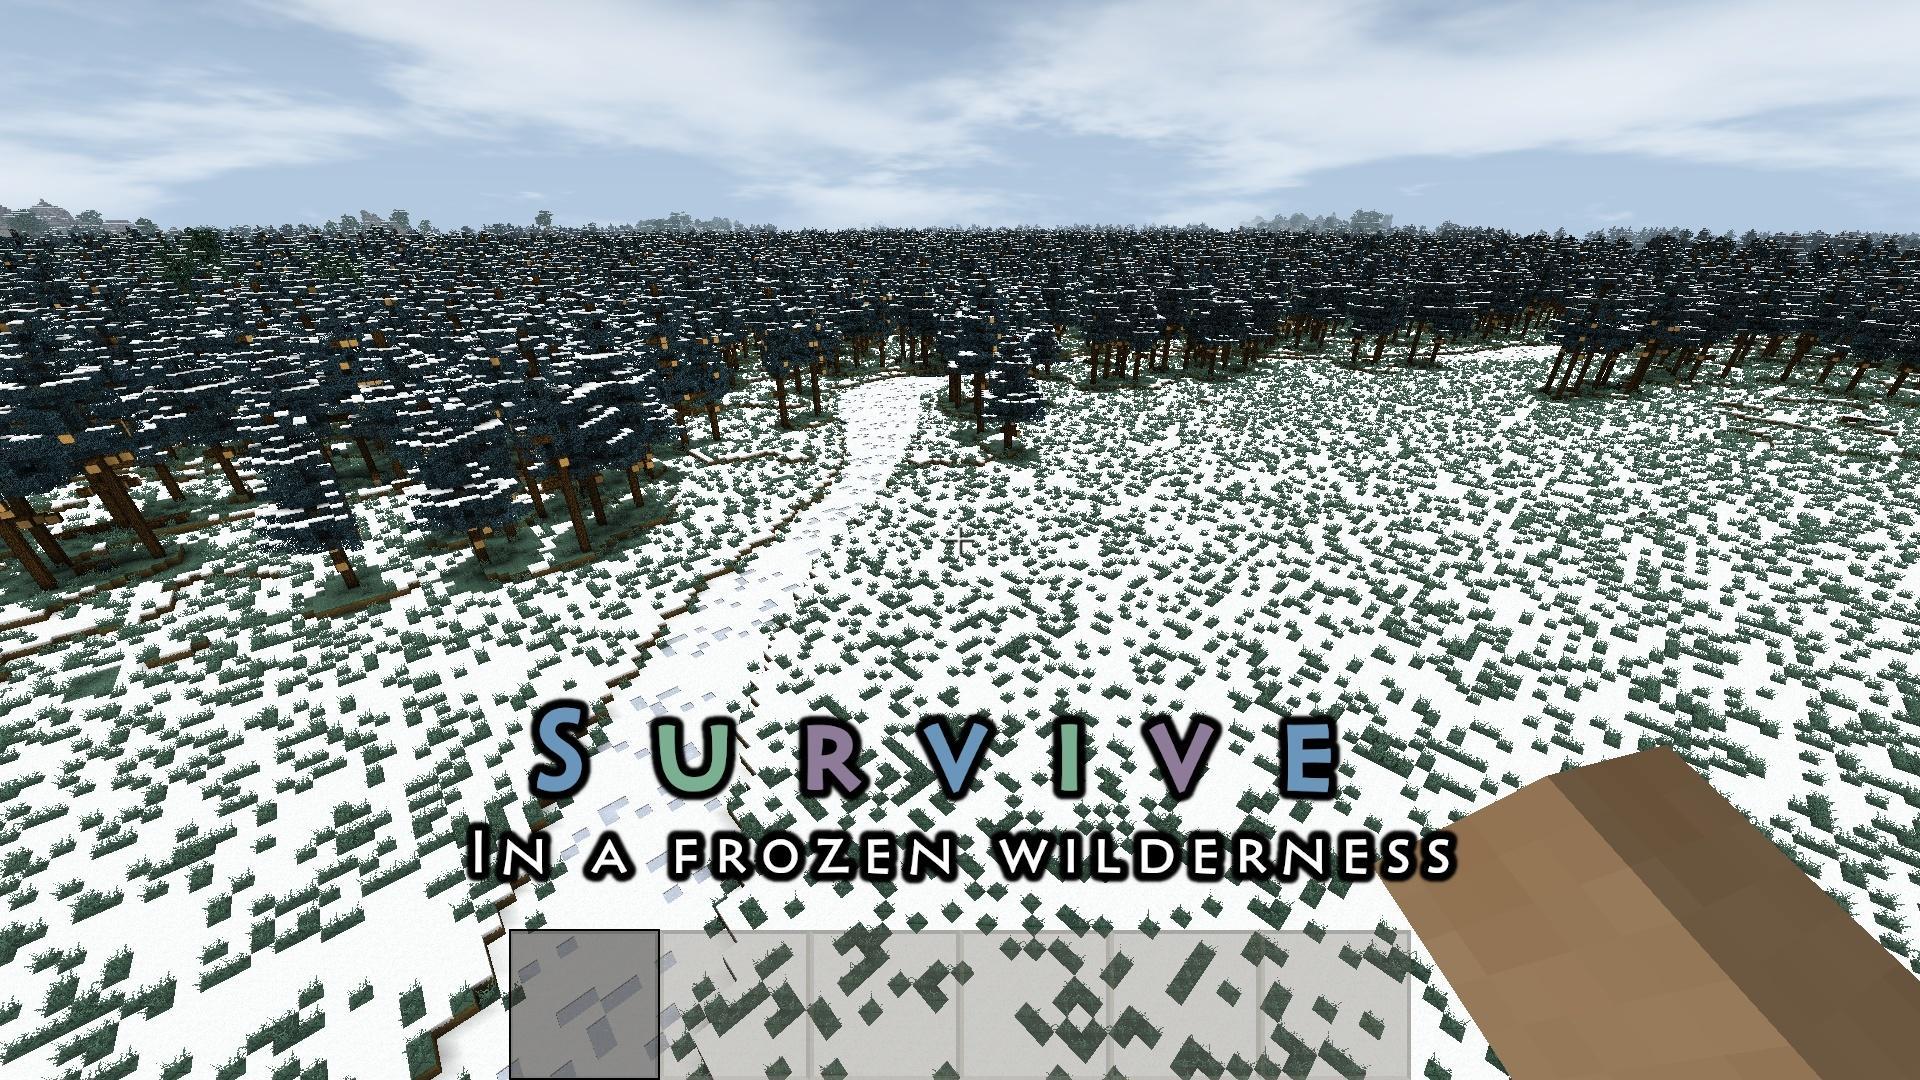 survivalcraft 2 pc free download